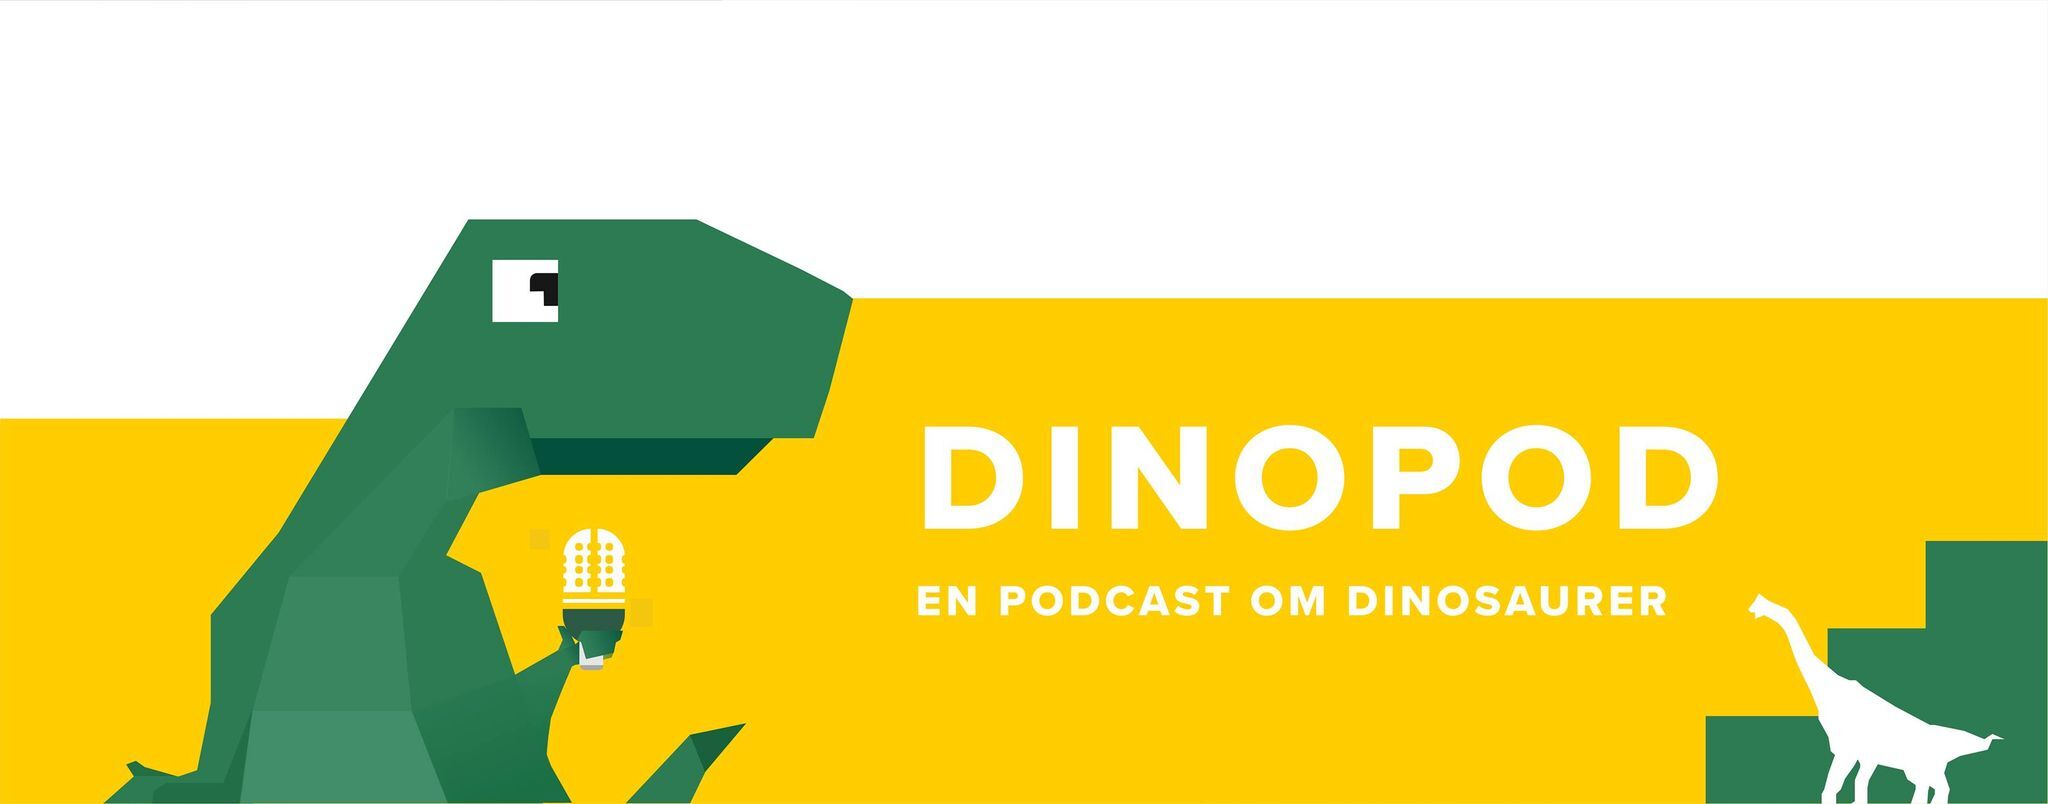 Dinopodcast